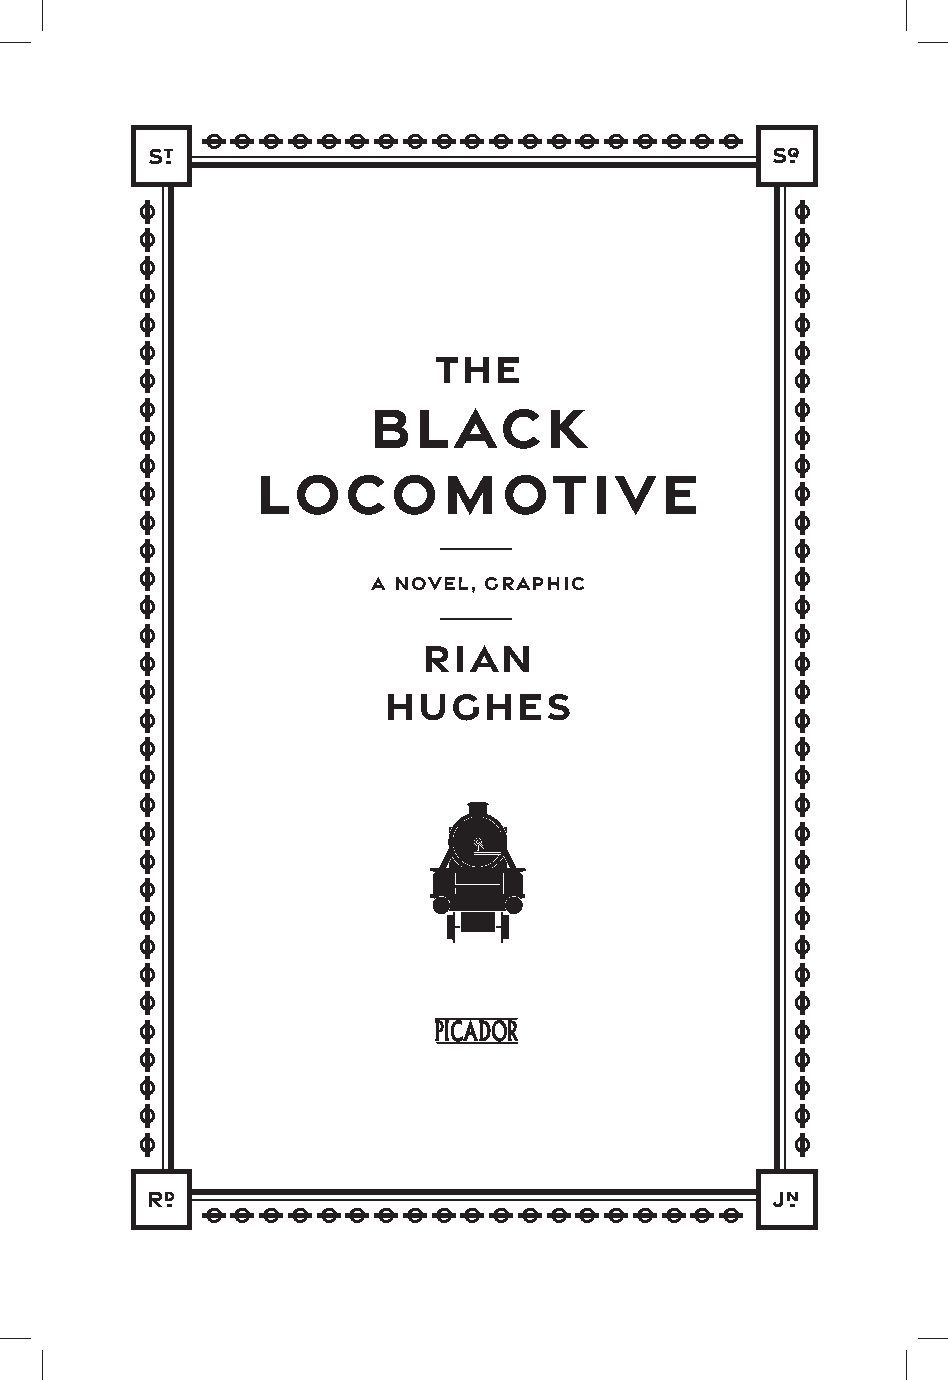 The Black Locomotive